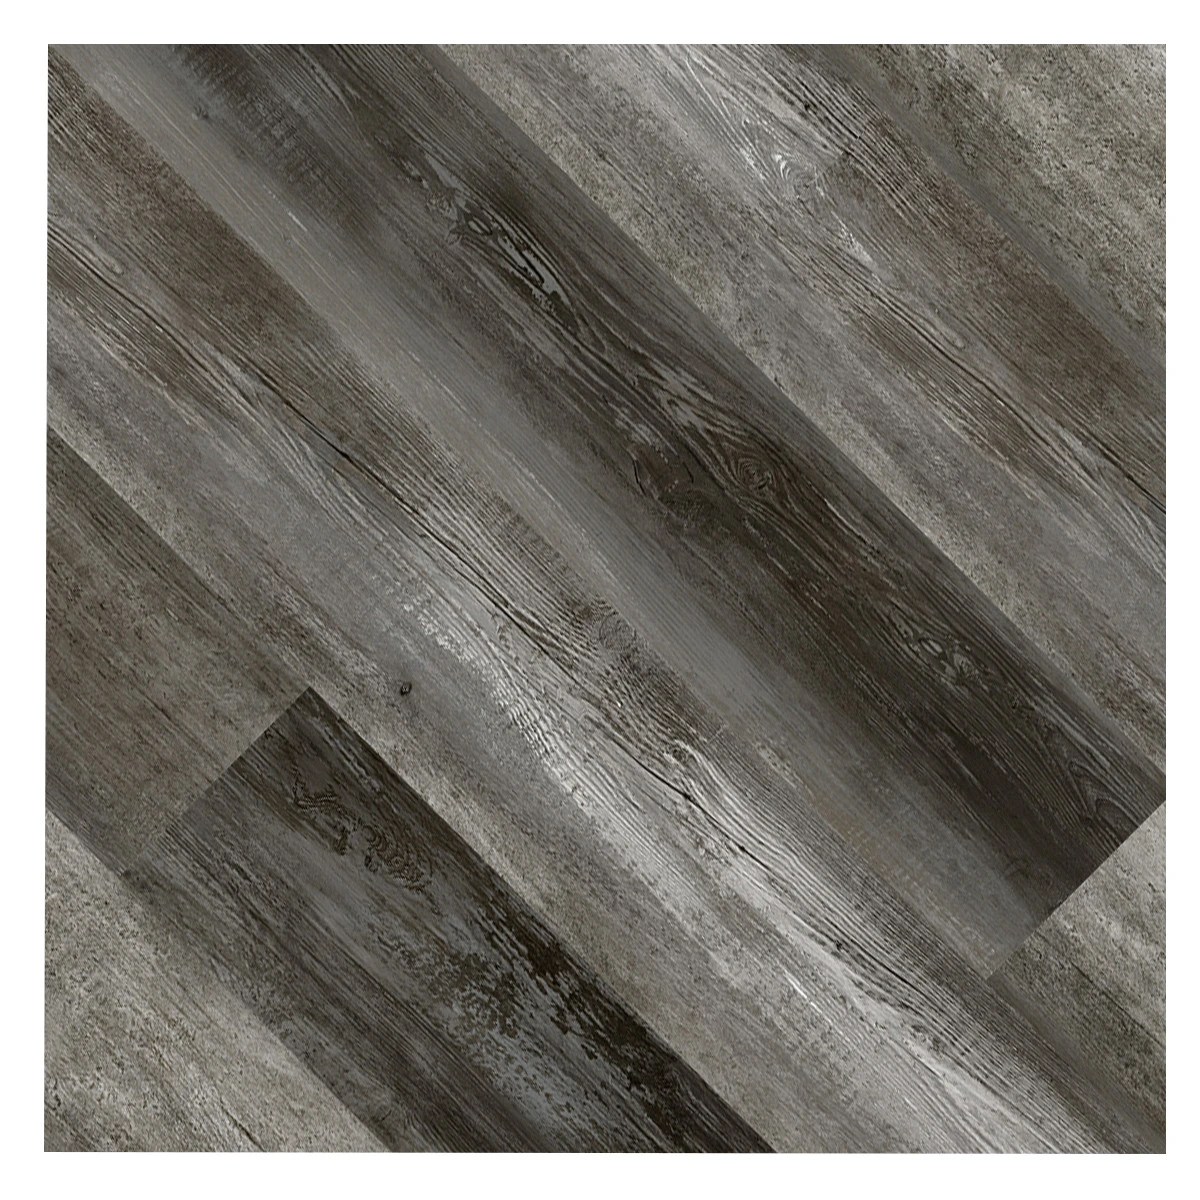 Various sizes stone marble grain 9x9 vinyl floor tiles, Click Vinyl Floor